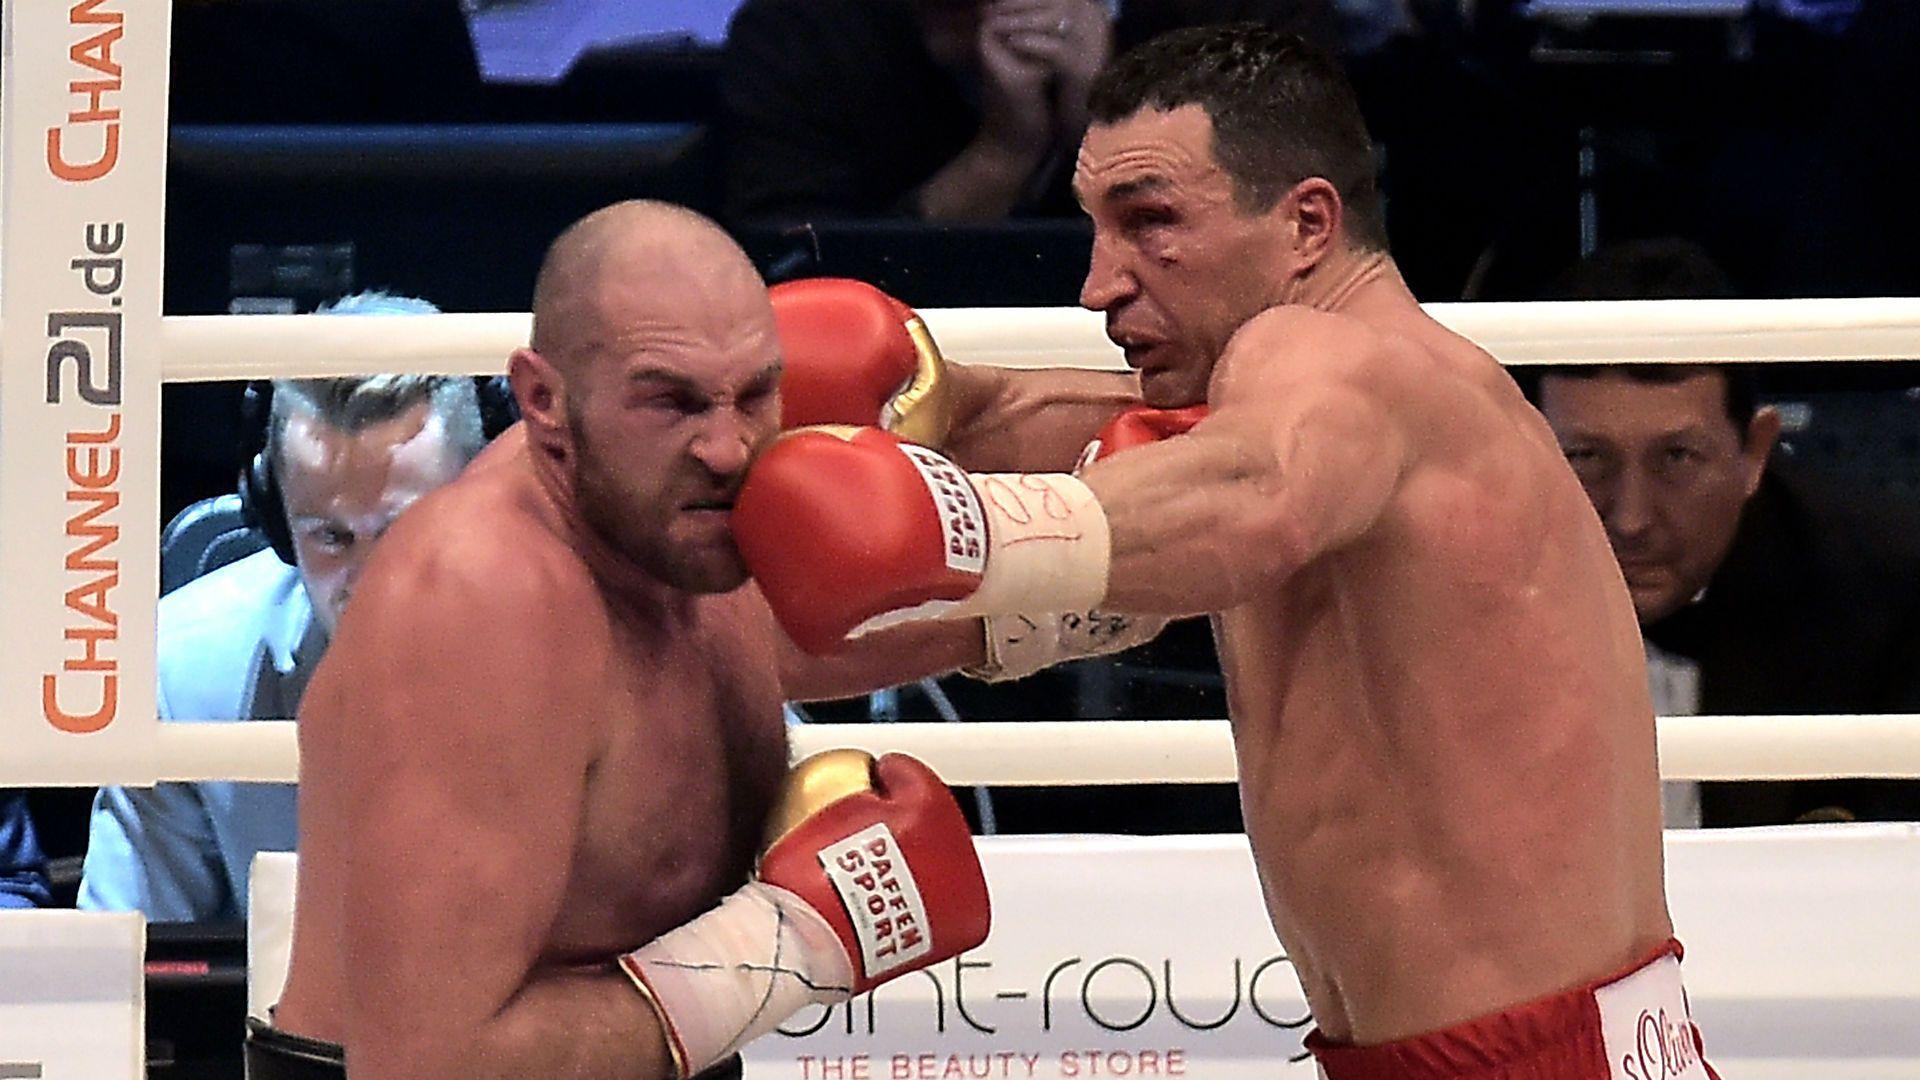 Tyson Fury shocks world, upsets Wladimir Klitschko for heavyweight